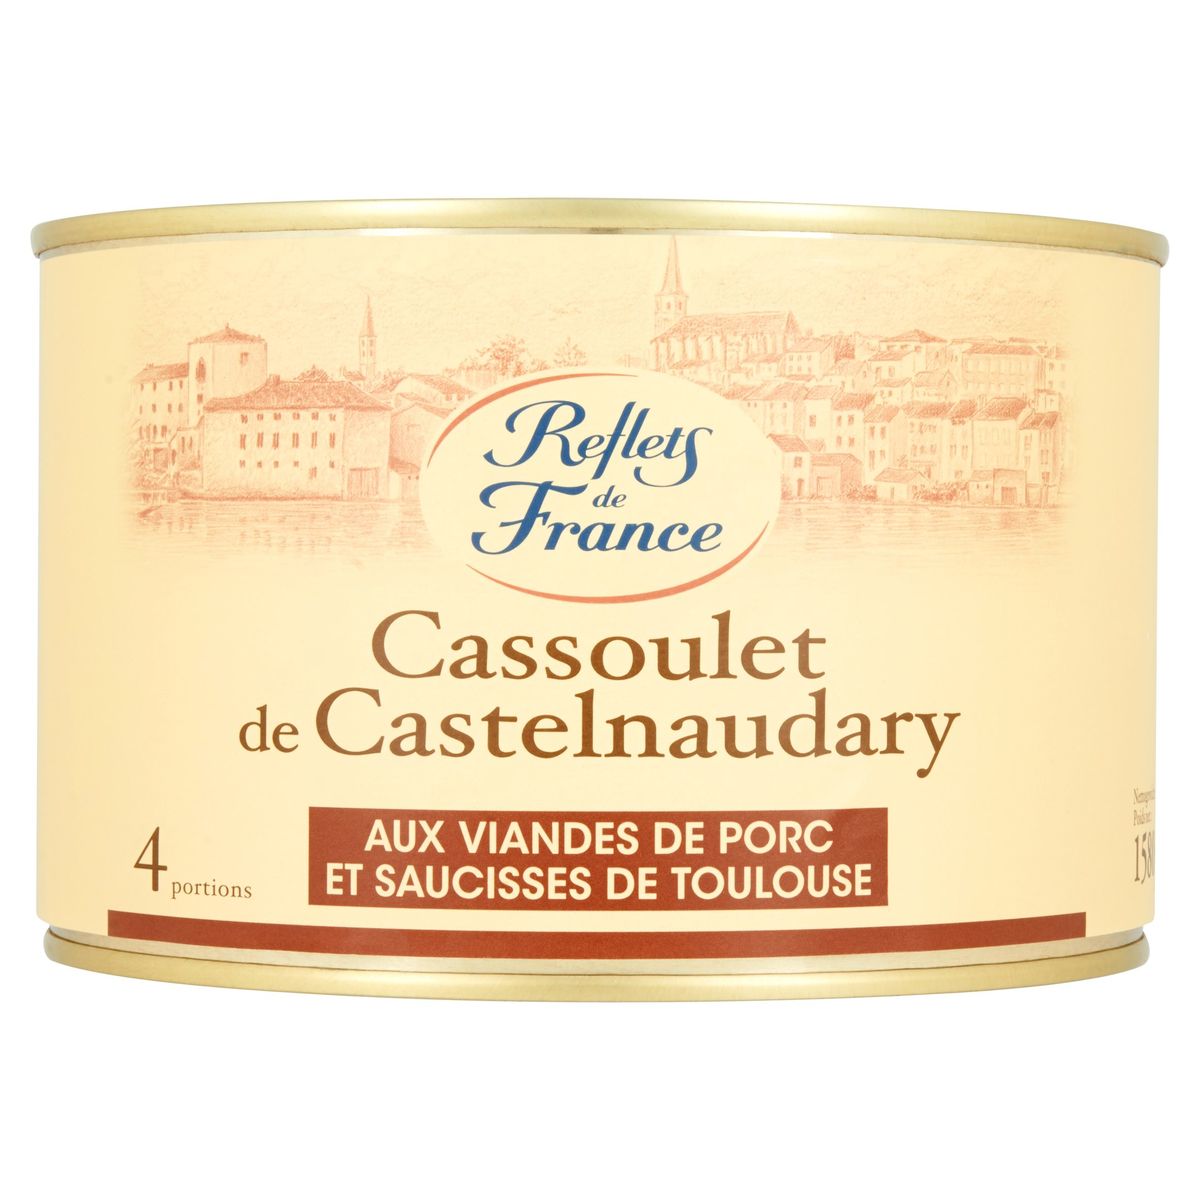 Reflets de France Cassoulet de Castelnaudary 1580 g